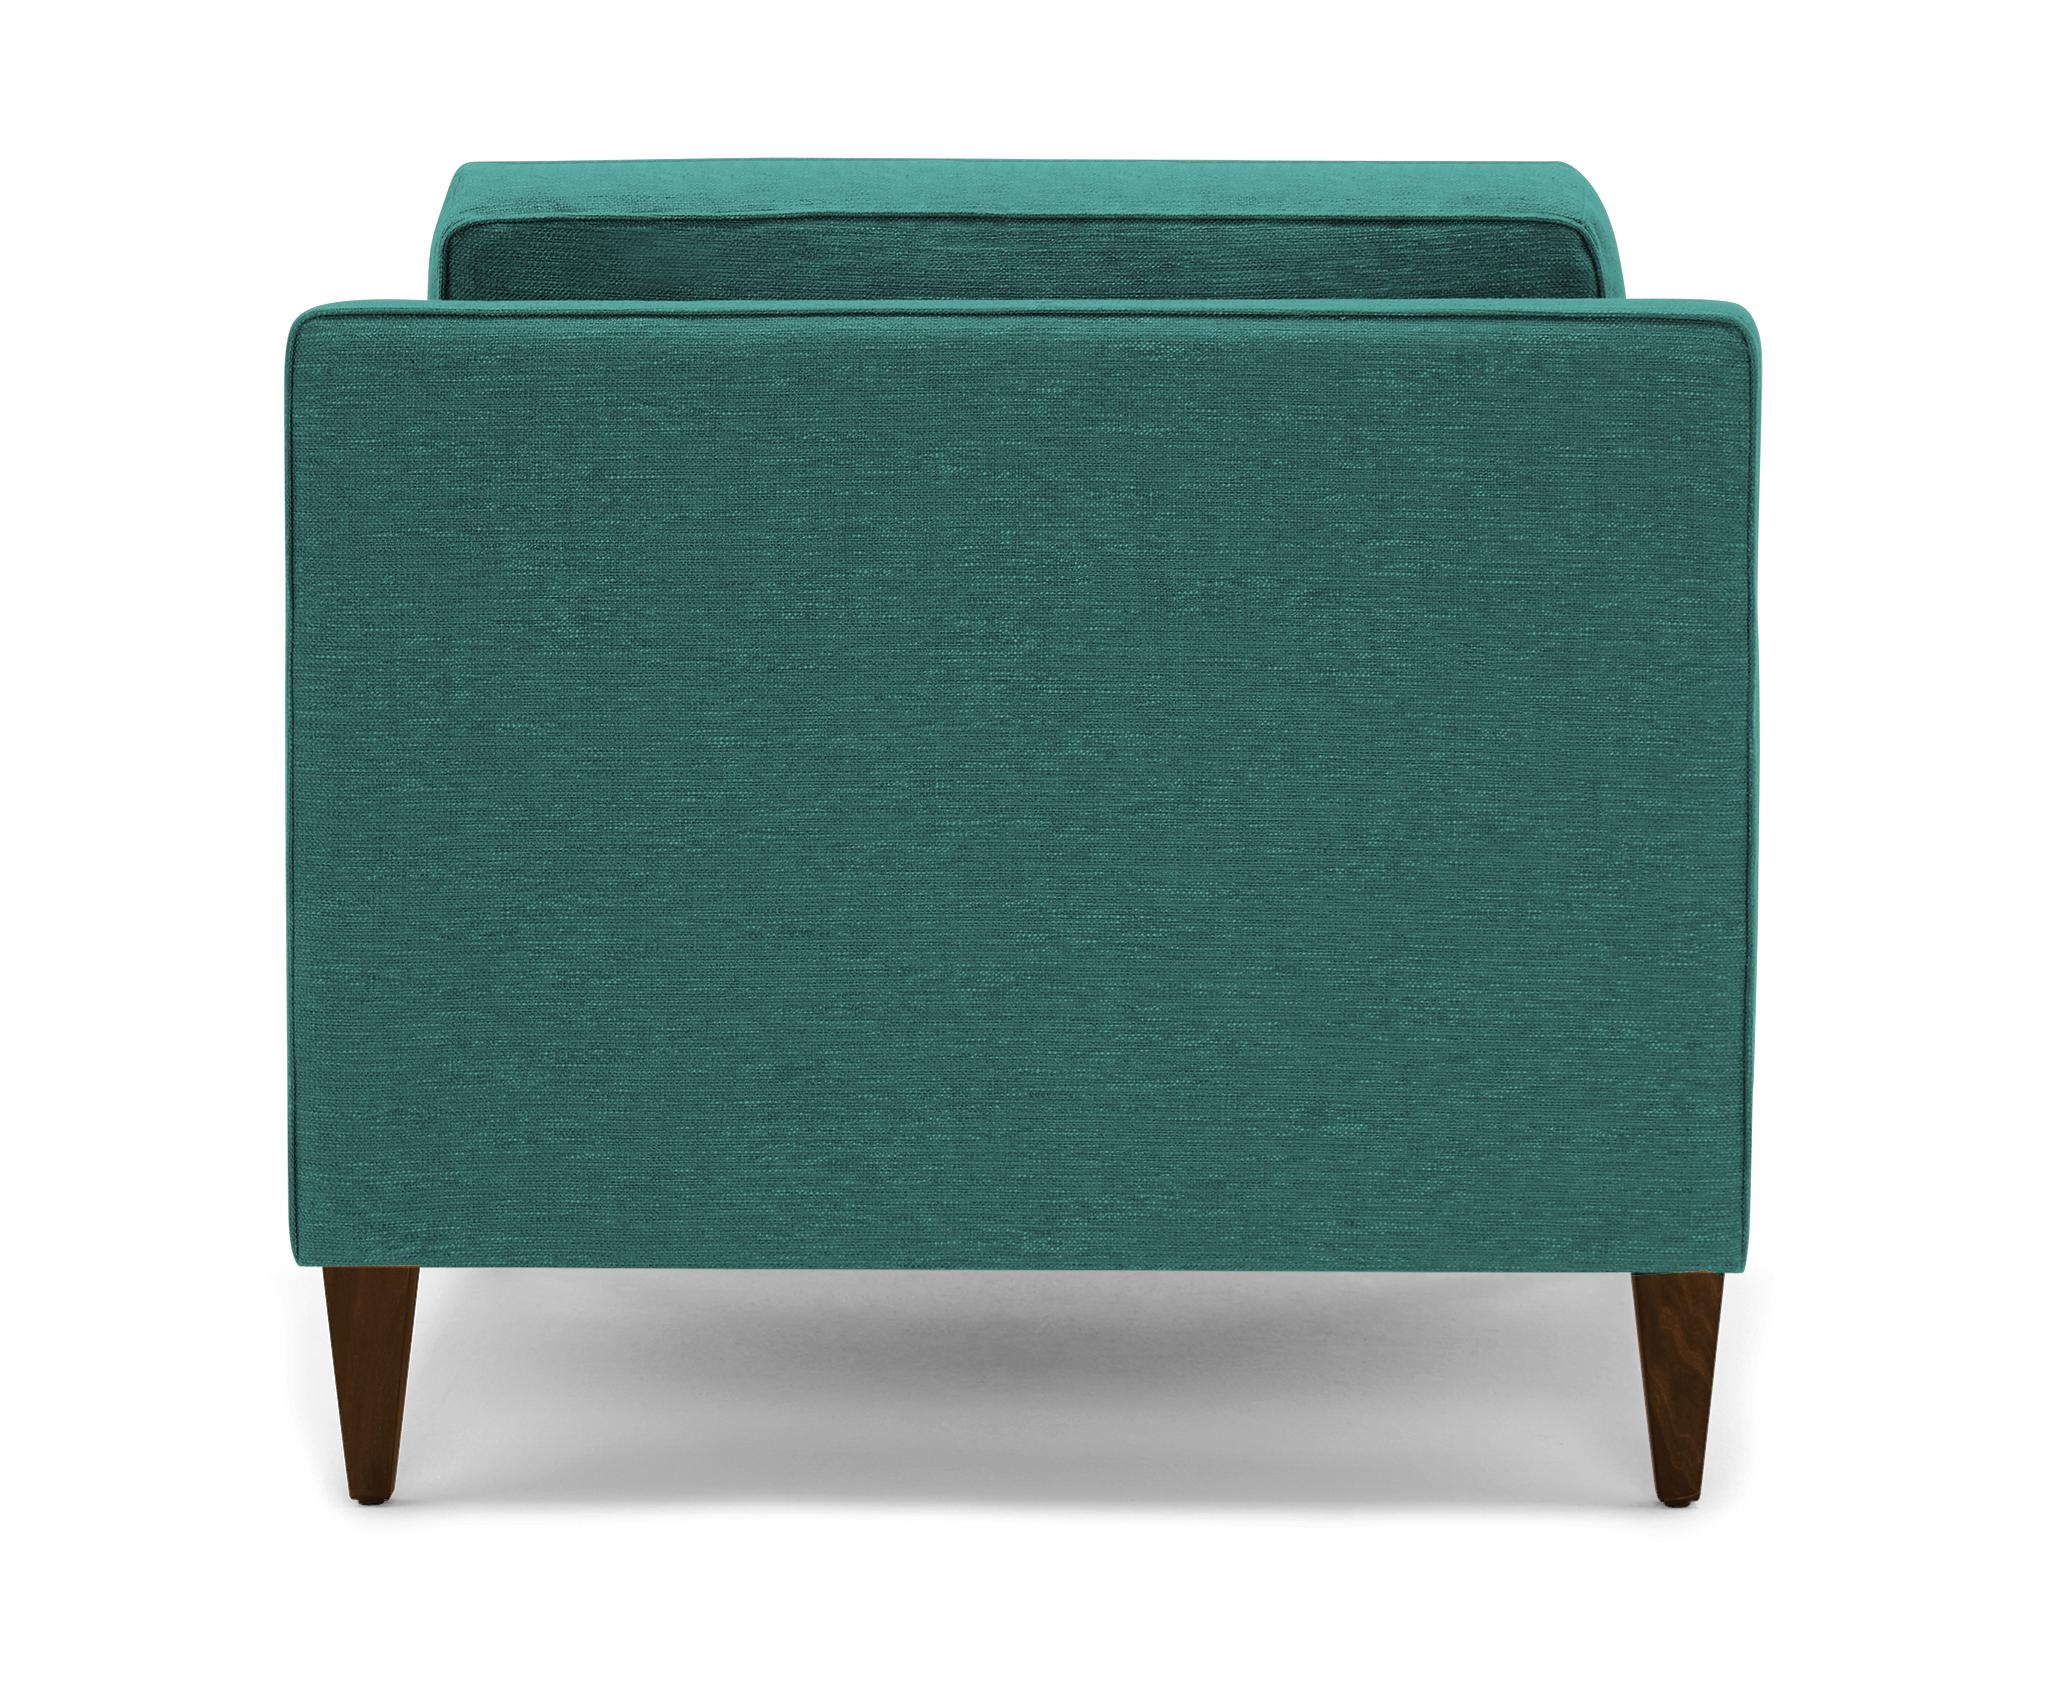 Green Levi Mid Century Modern Chair - Essence Aqua - Mocha - Image 4